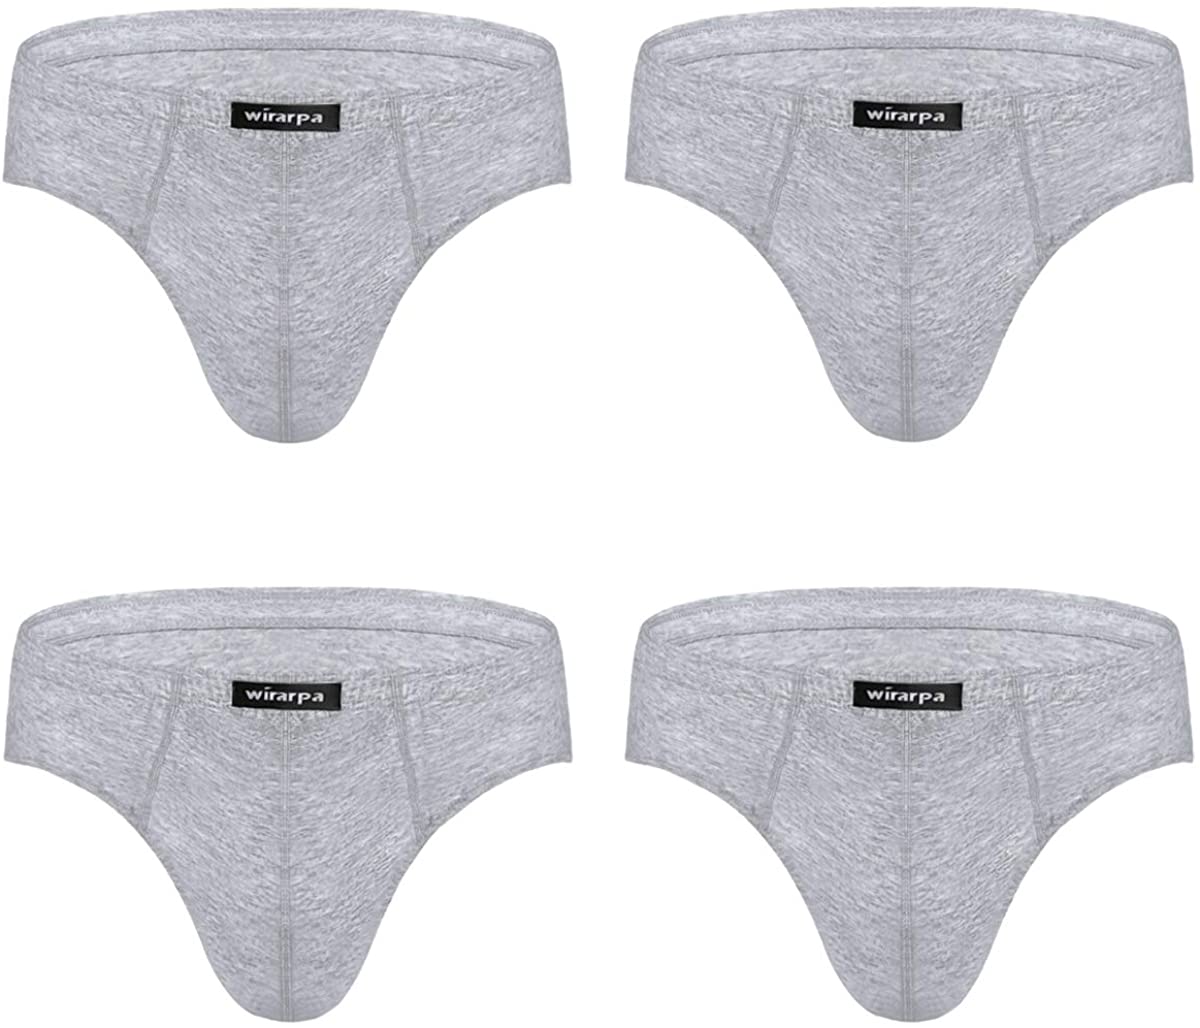 wirarpa Men's 100 Cotton Briefs Underwear No Fly Covered Waistband  Multipack